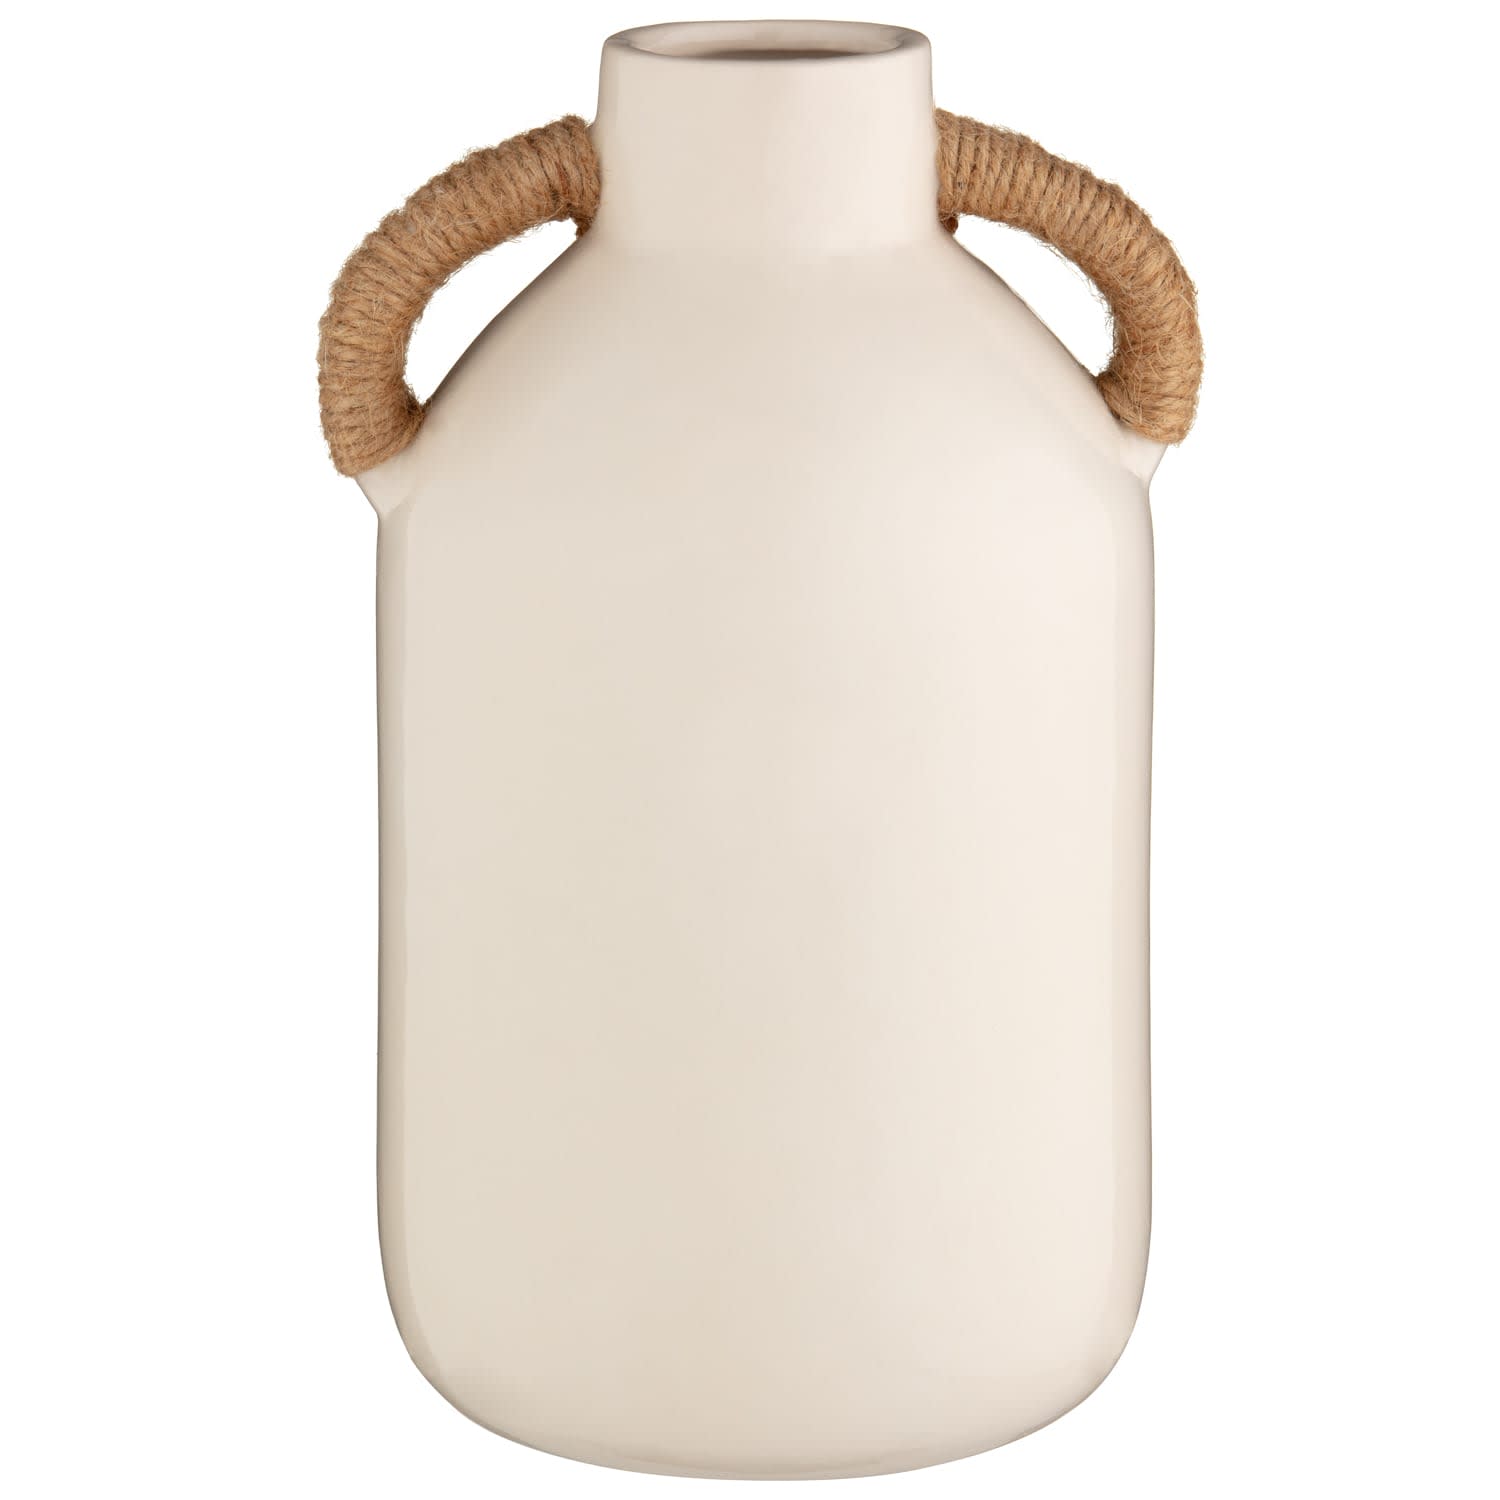 Ceramic Vase With Wicker Handles